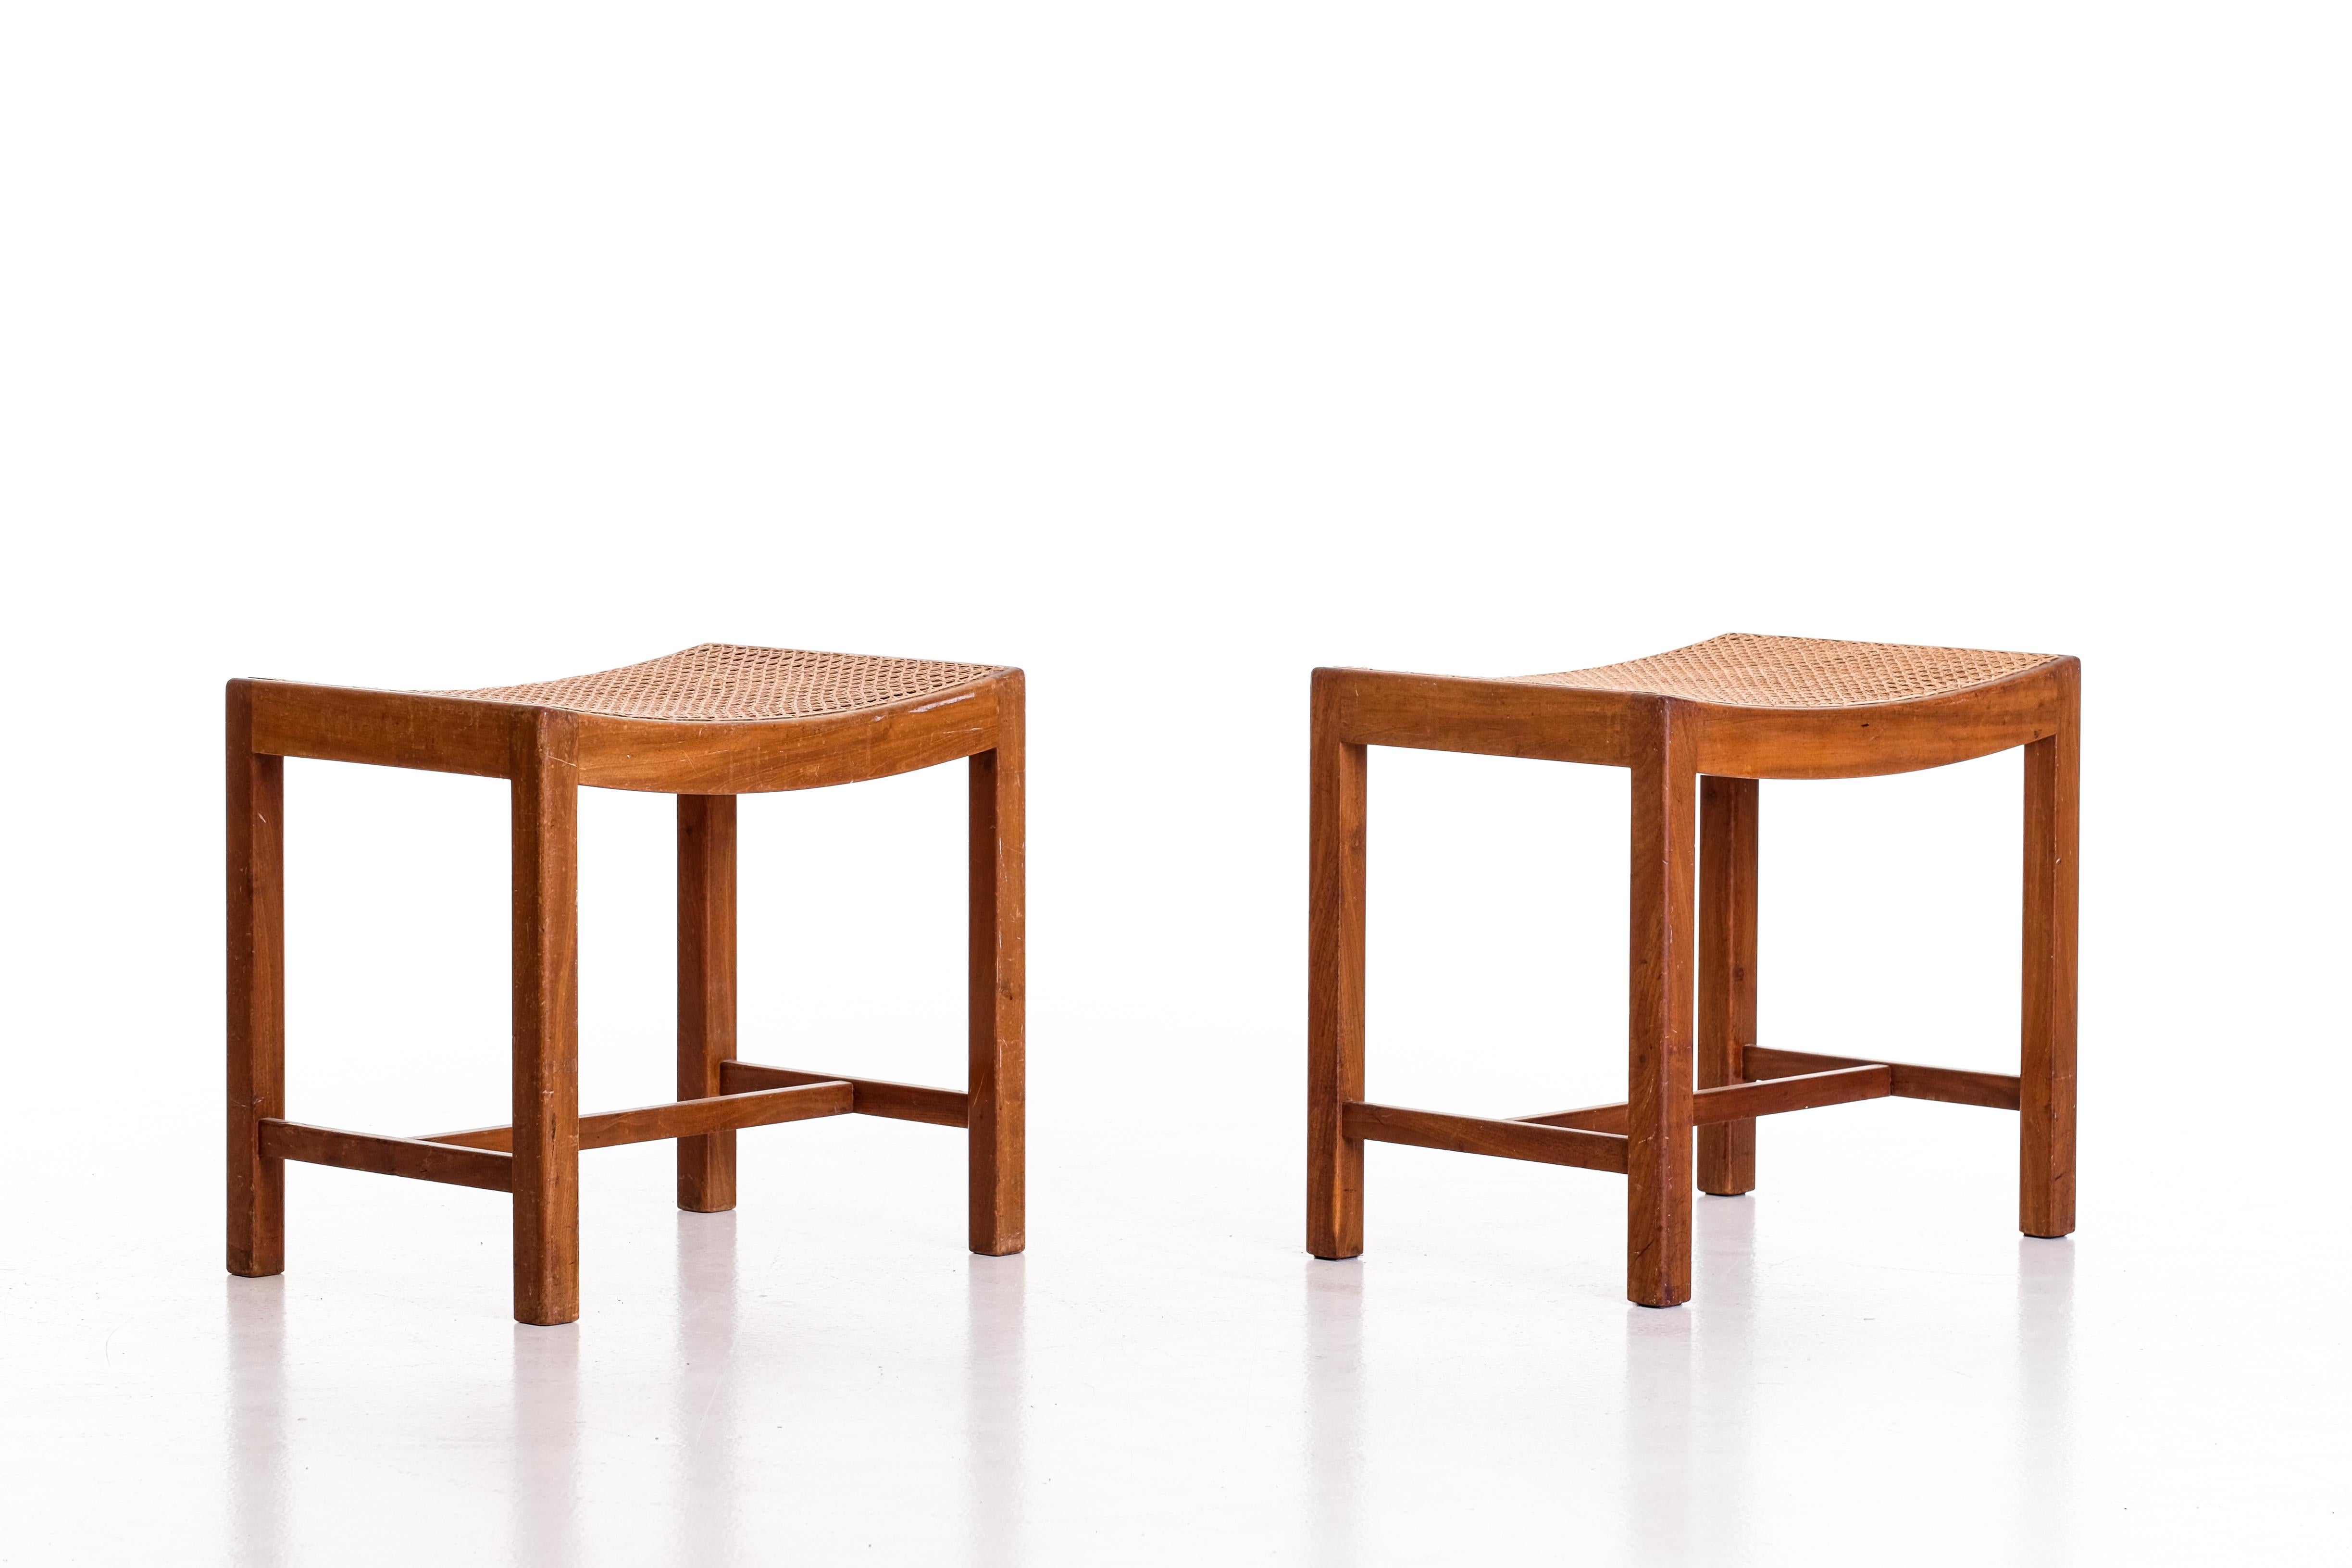 Pair of stools in mahogny and cane, Denmark, 1940s.